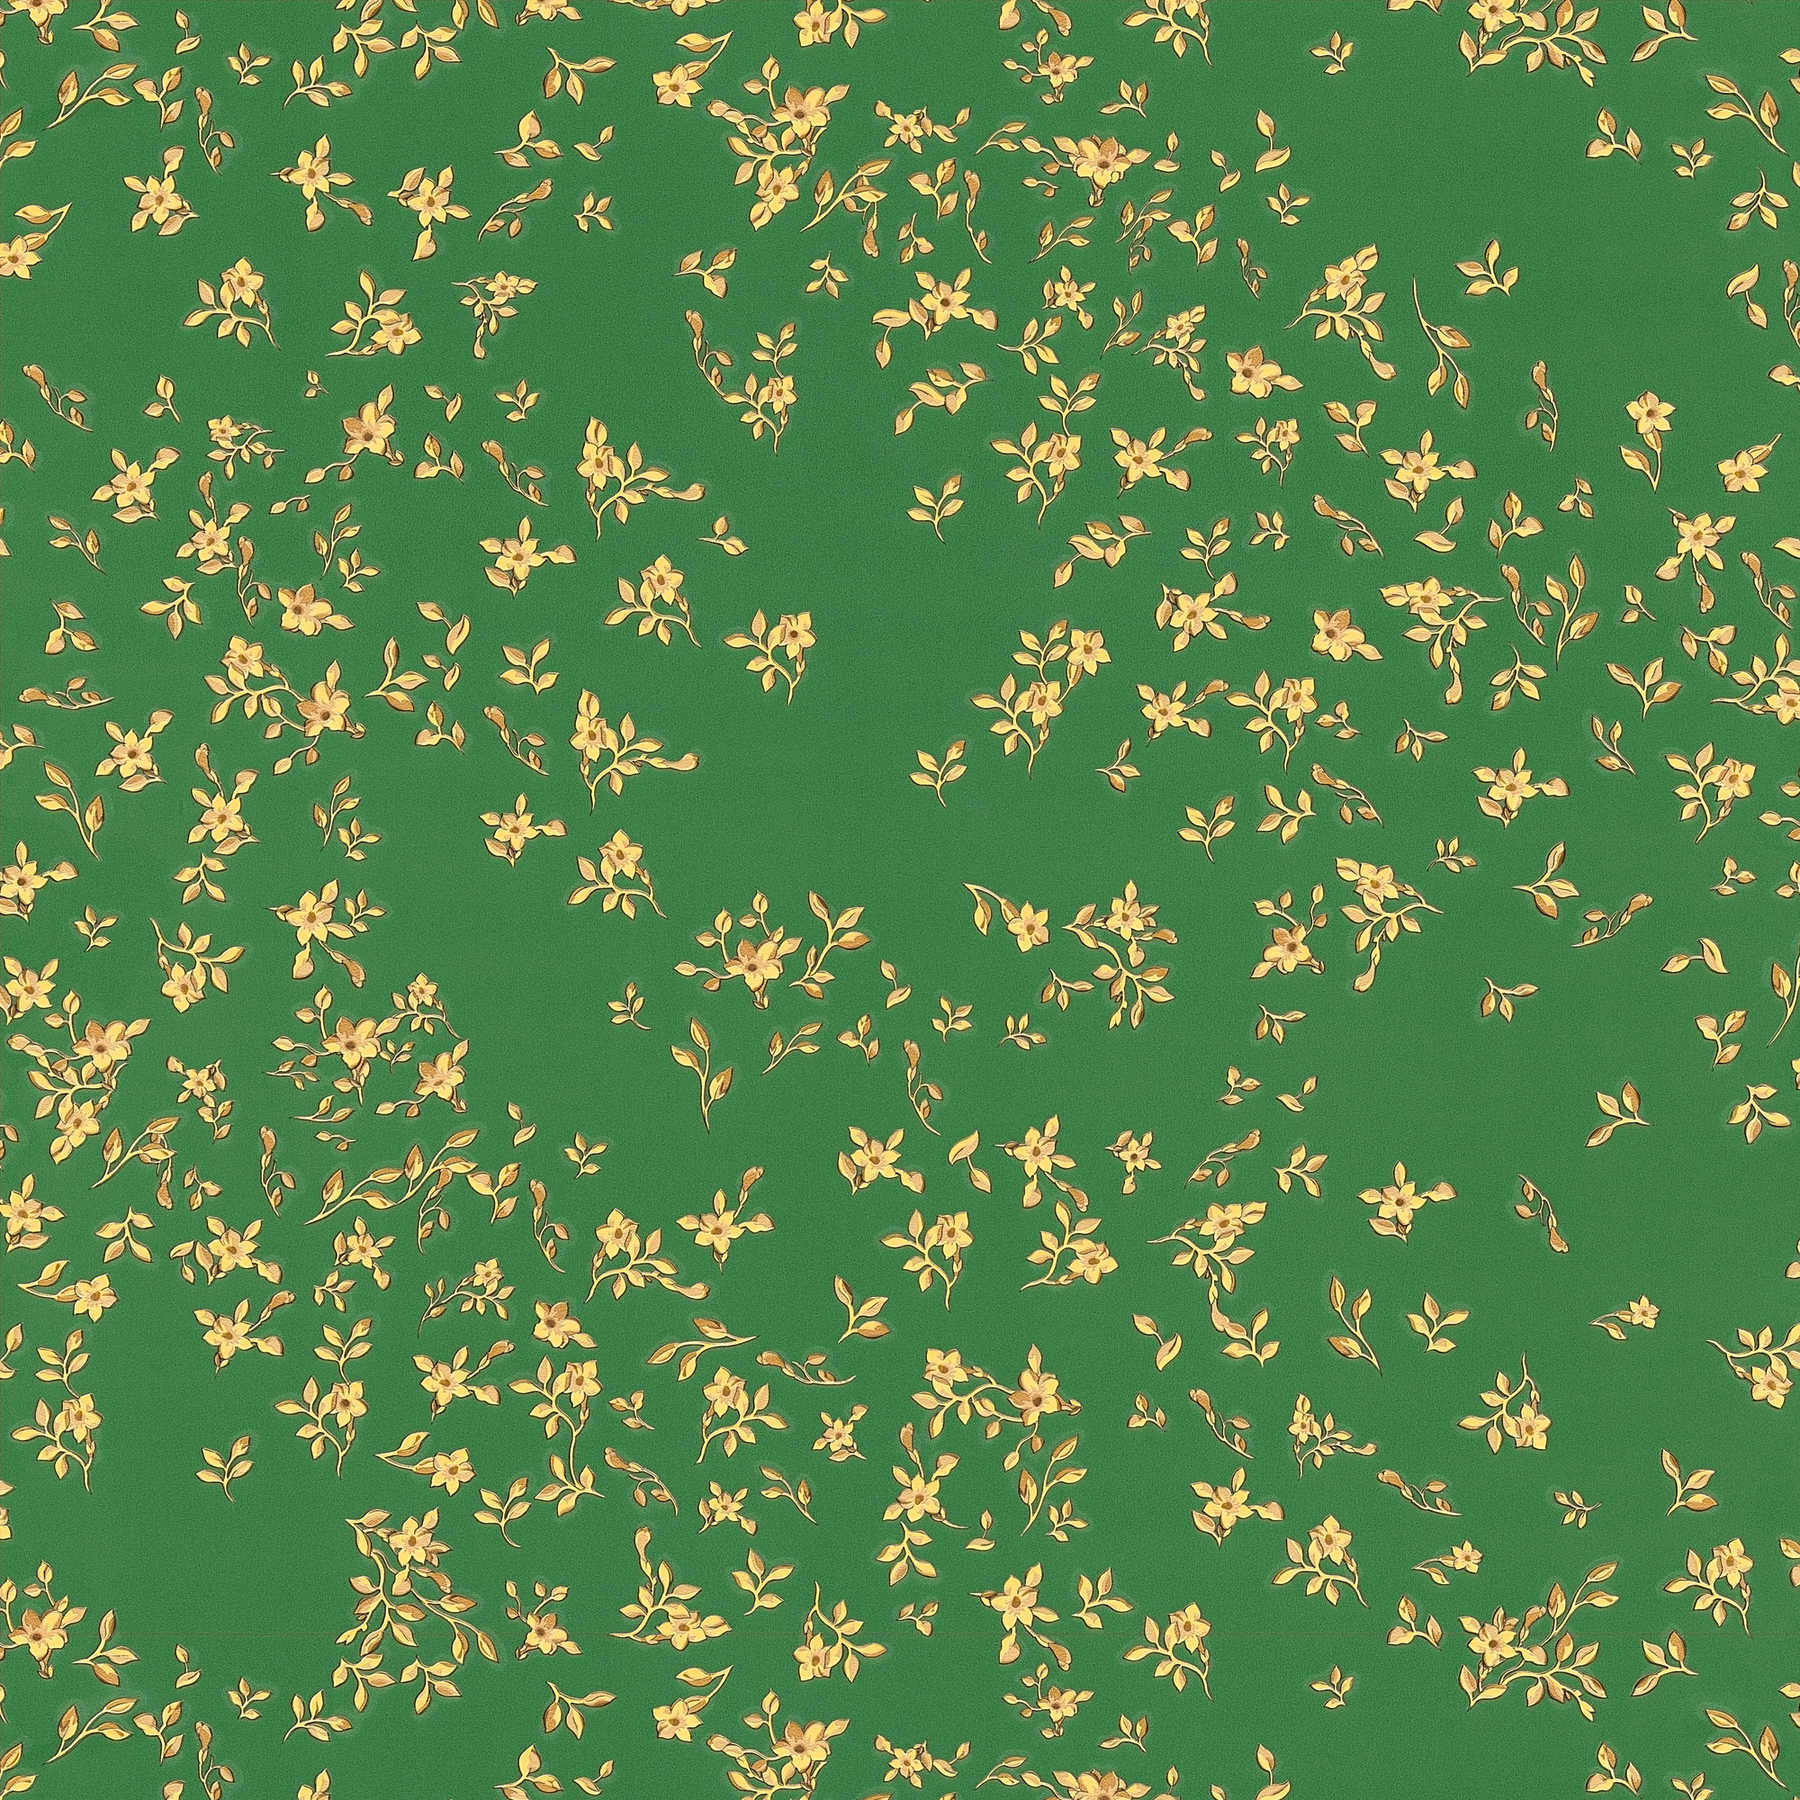 Green VERSACE wallpaper with golden flowers - green, gold, yellow
